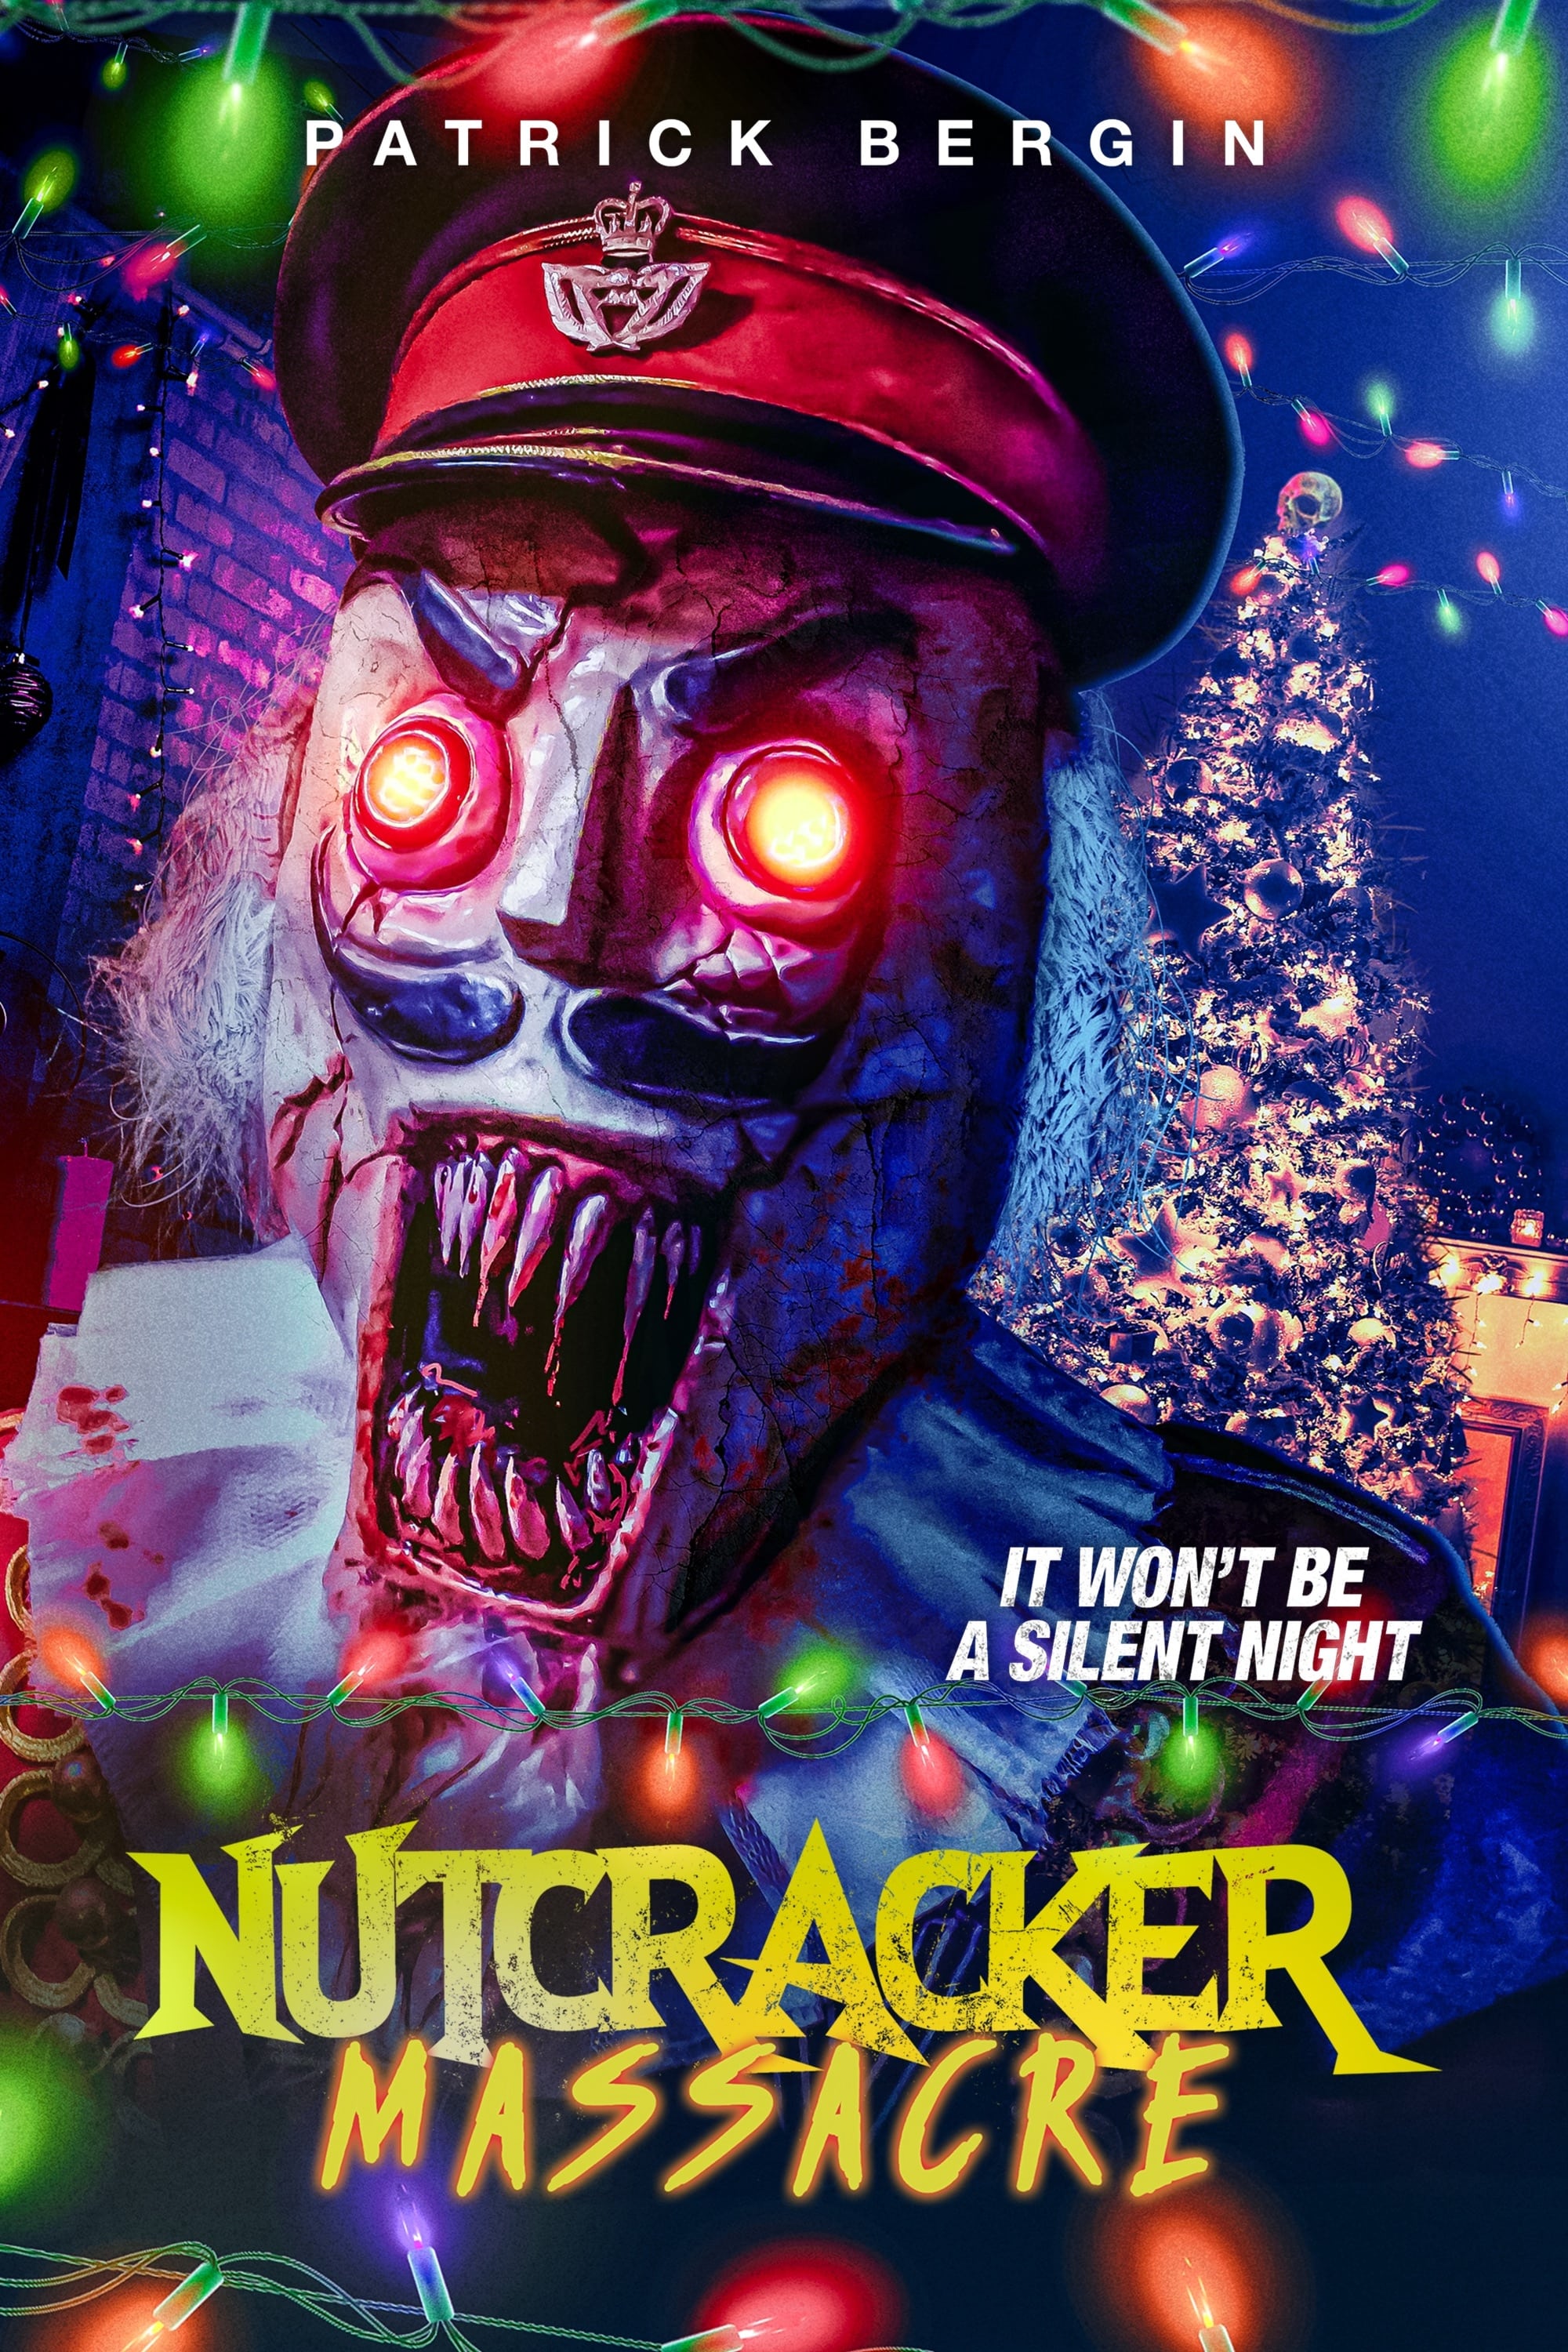 Nutcracker Massacre